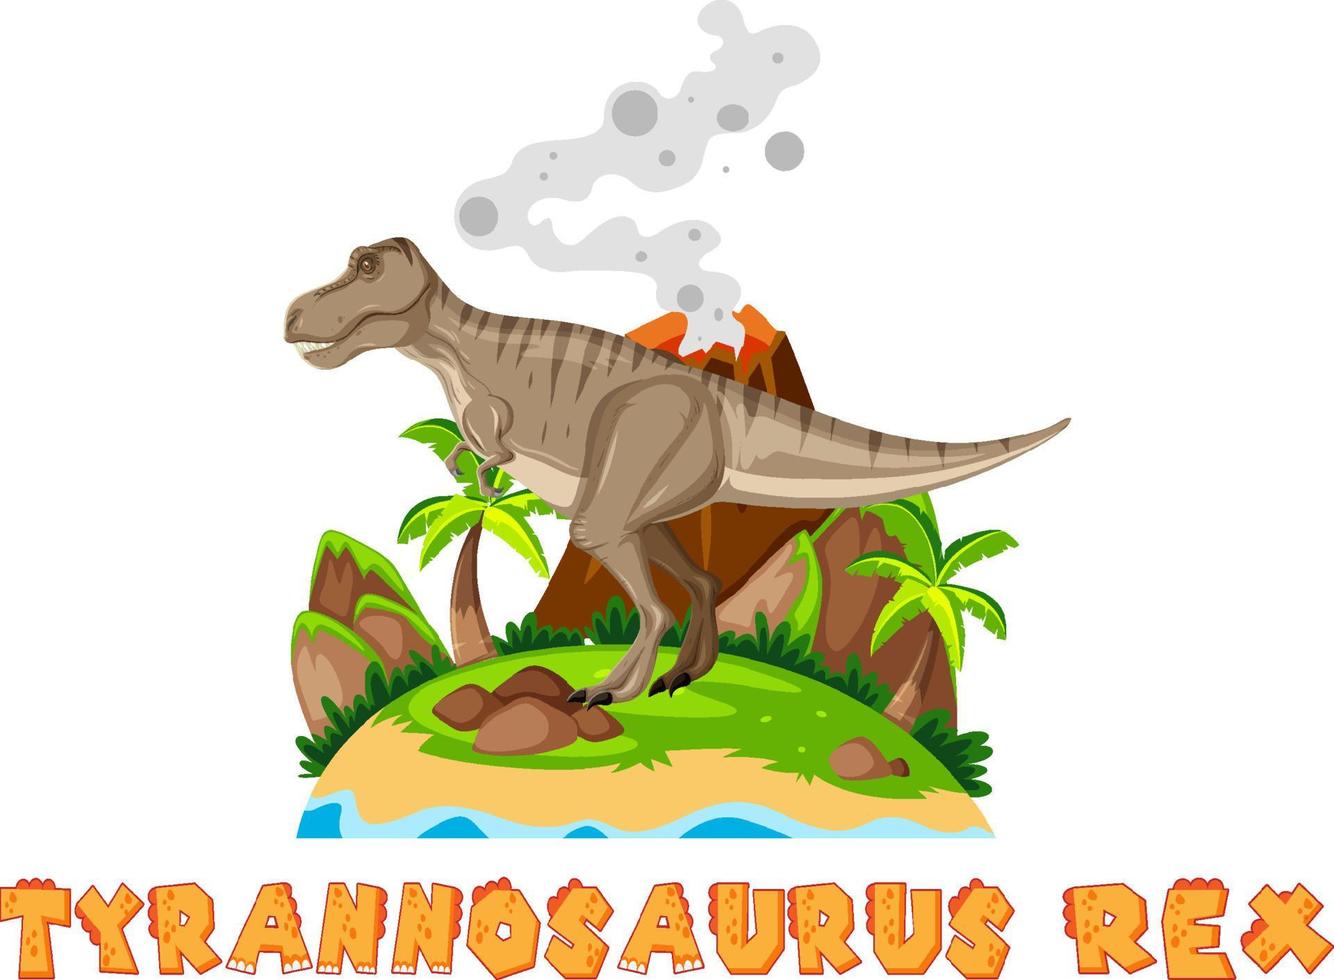 design wordcard per tirannosauro rex vettore